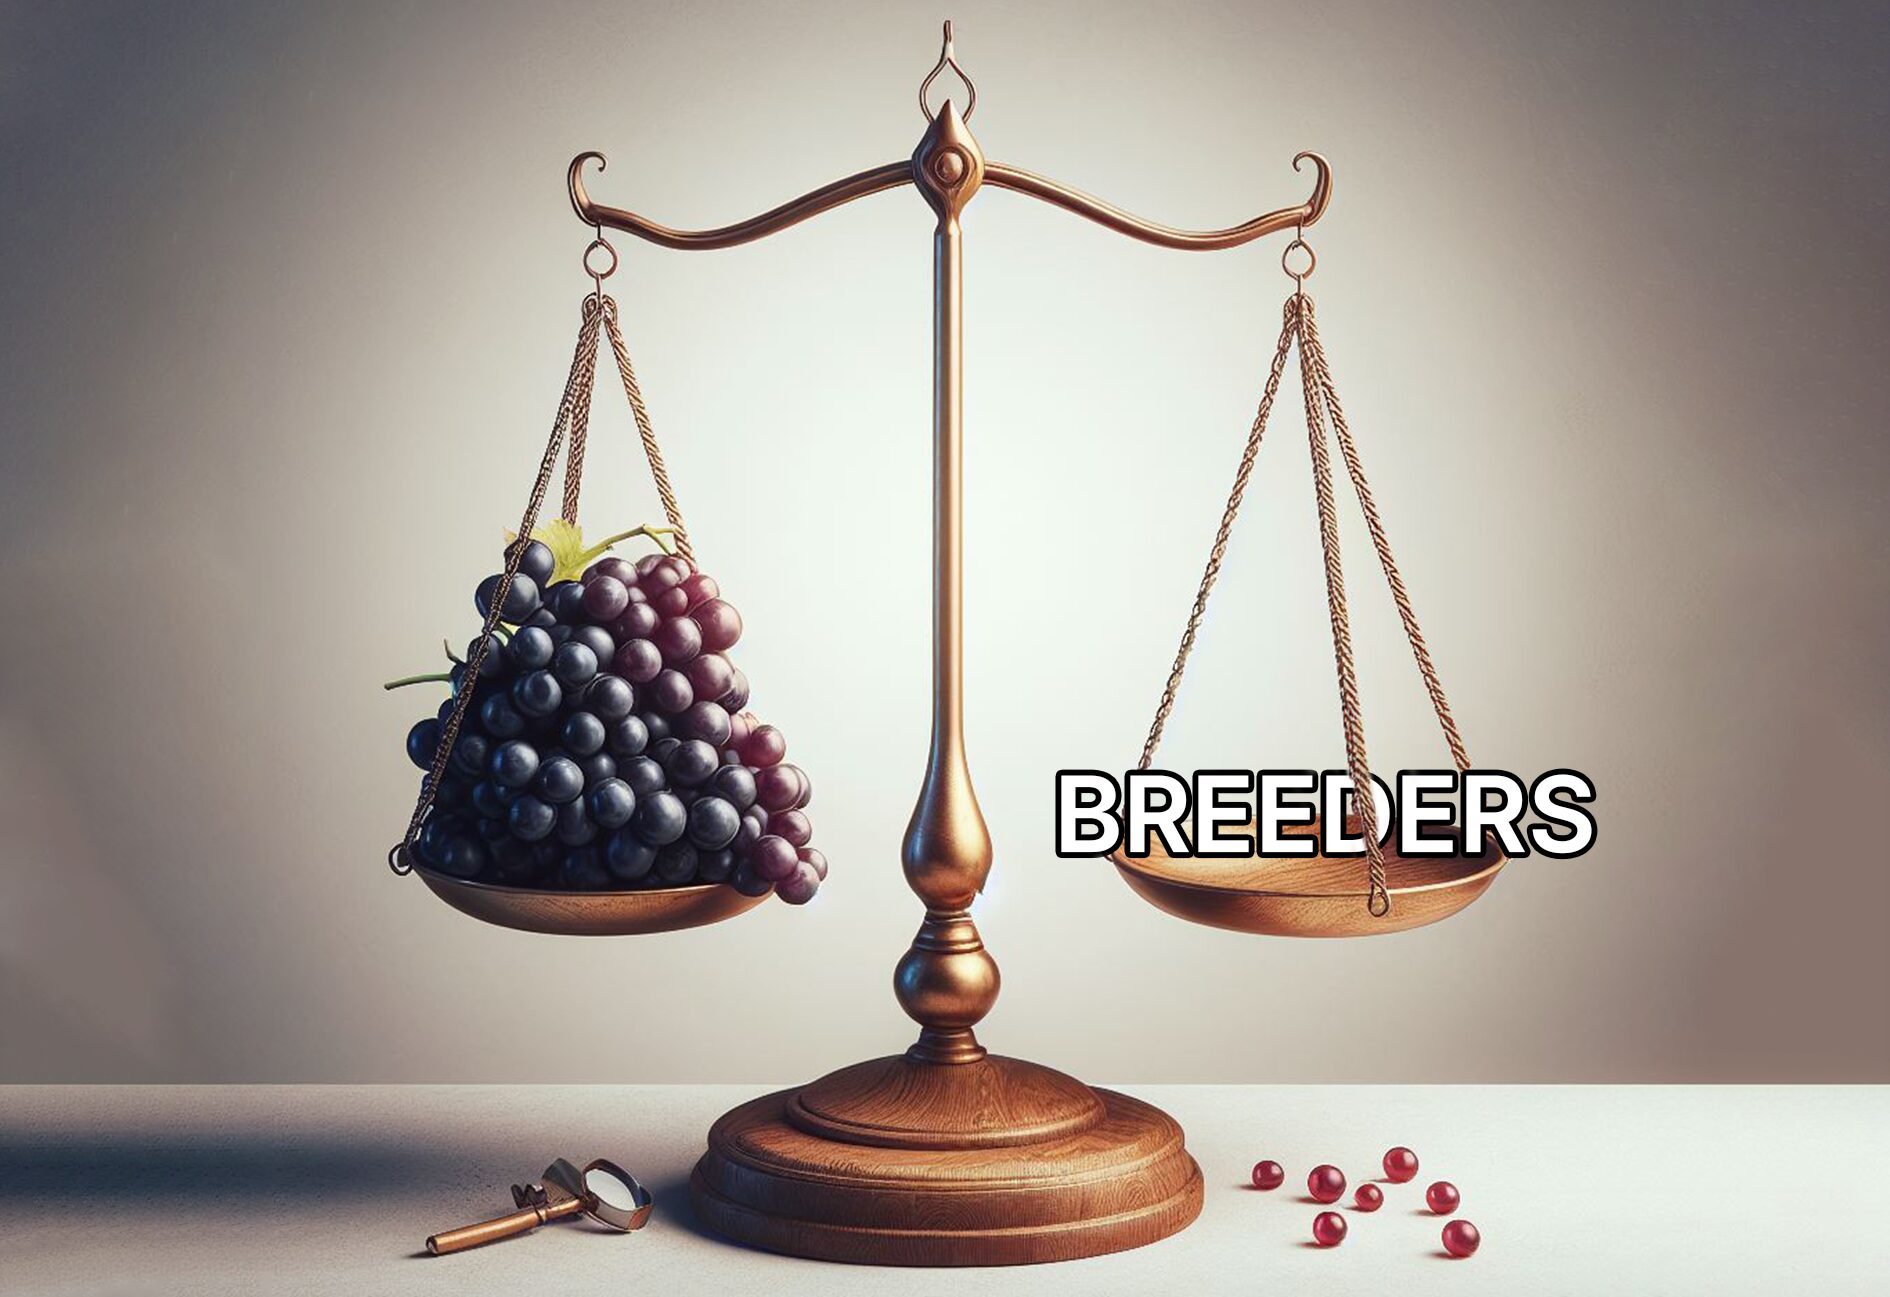 editoriale breeding